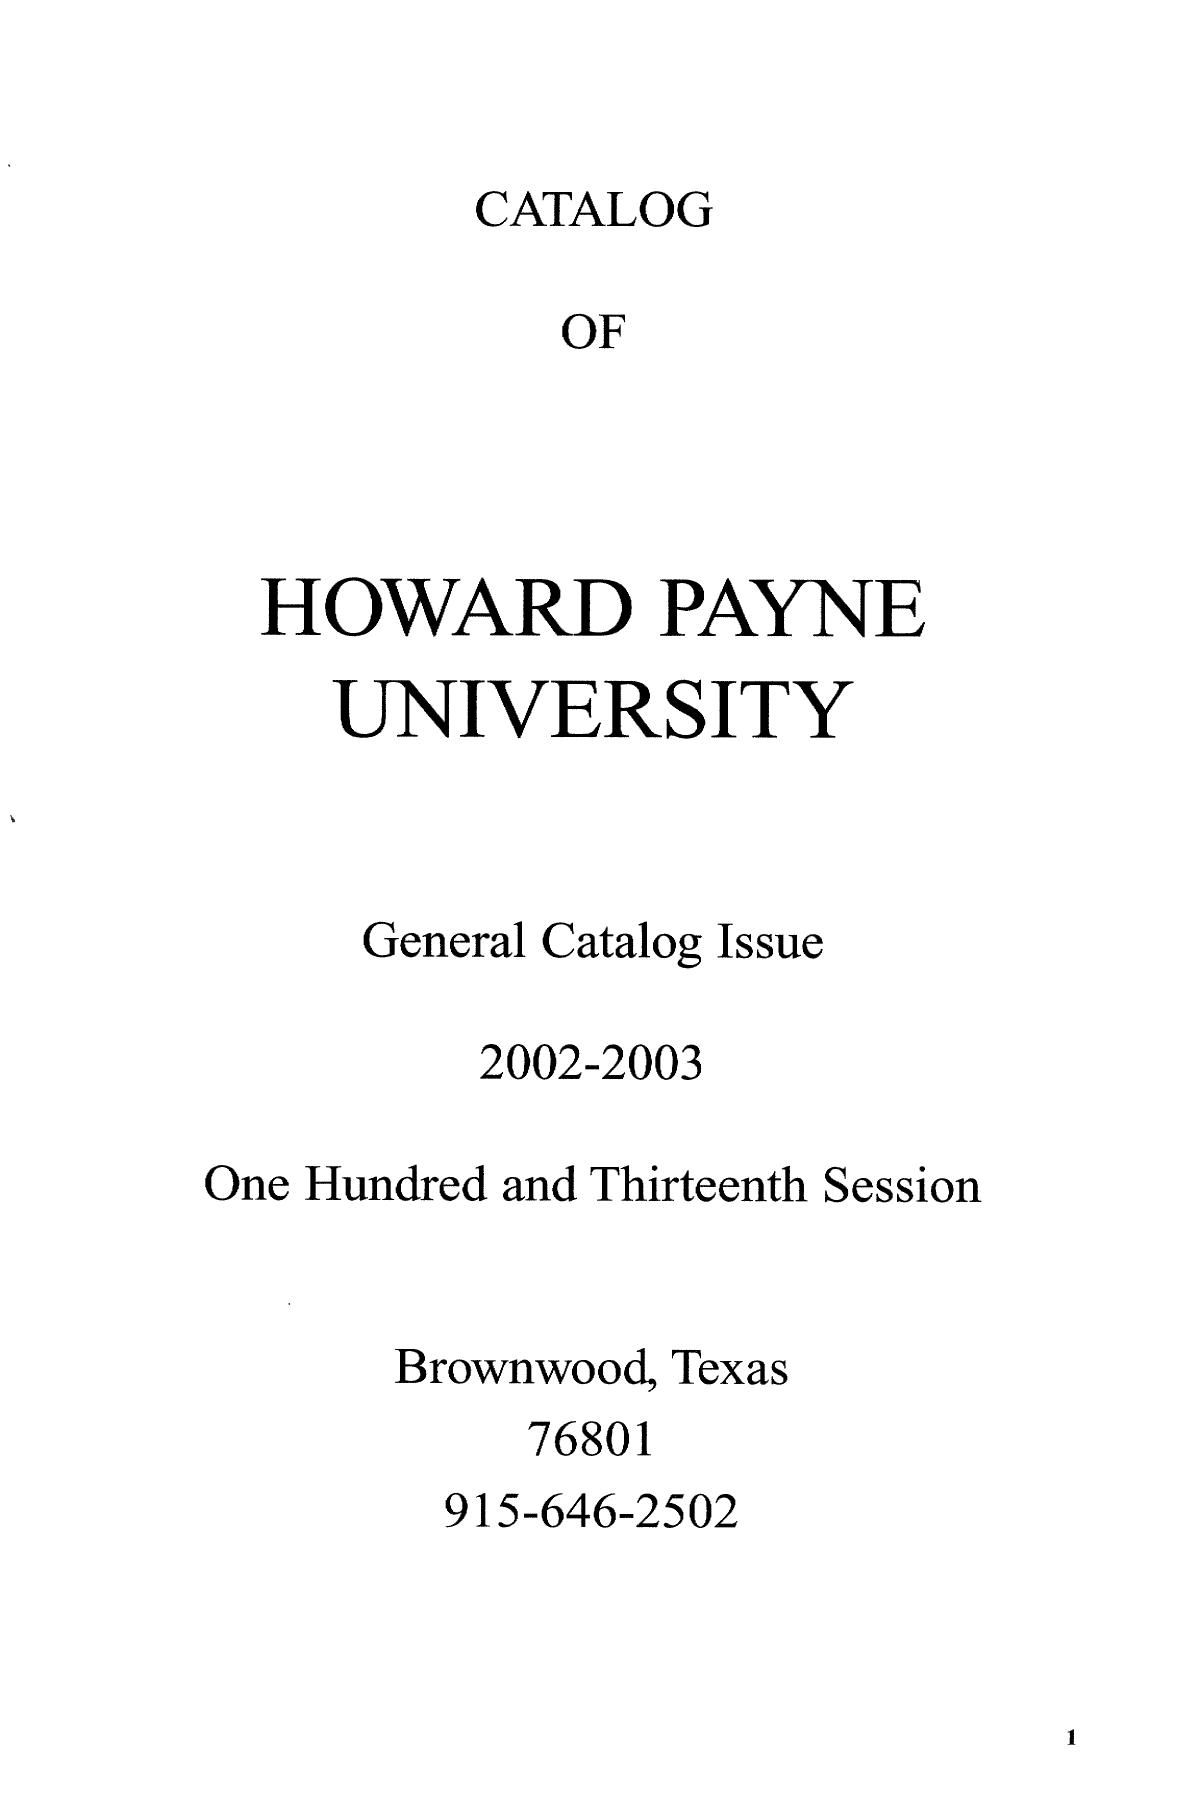 Catalog of Howard Payne University, 2002-2003
                                                
                                                    1
                                                